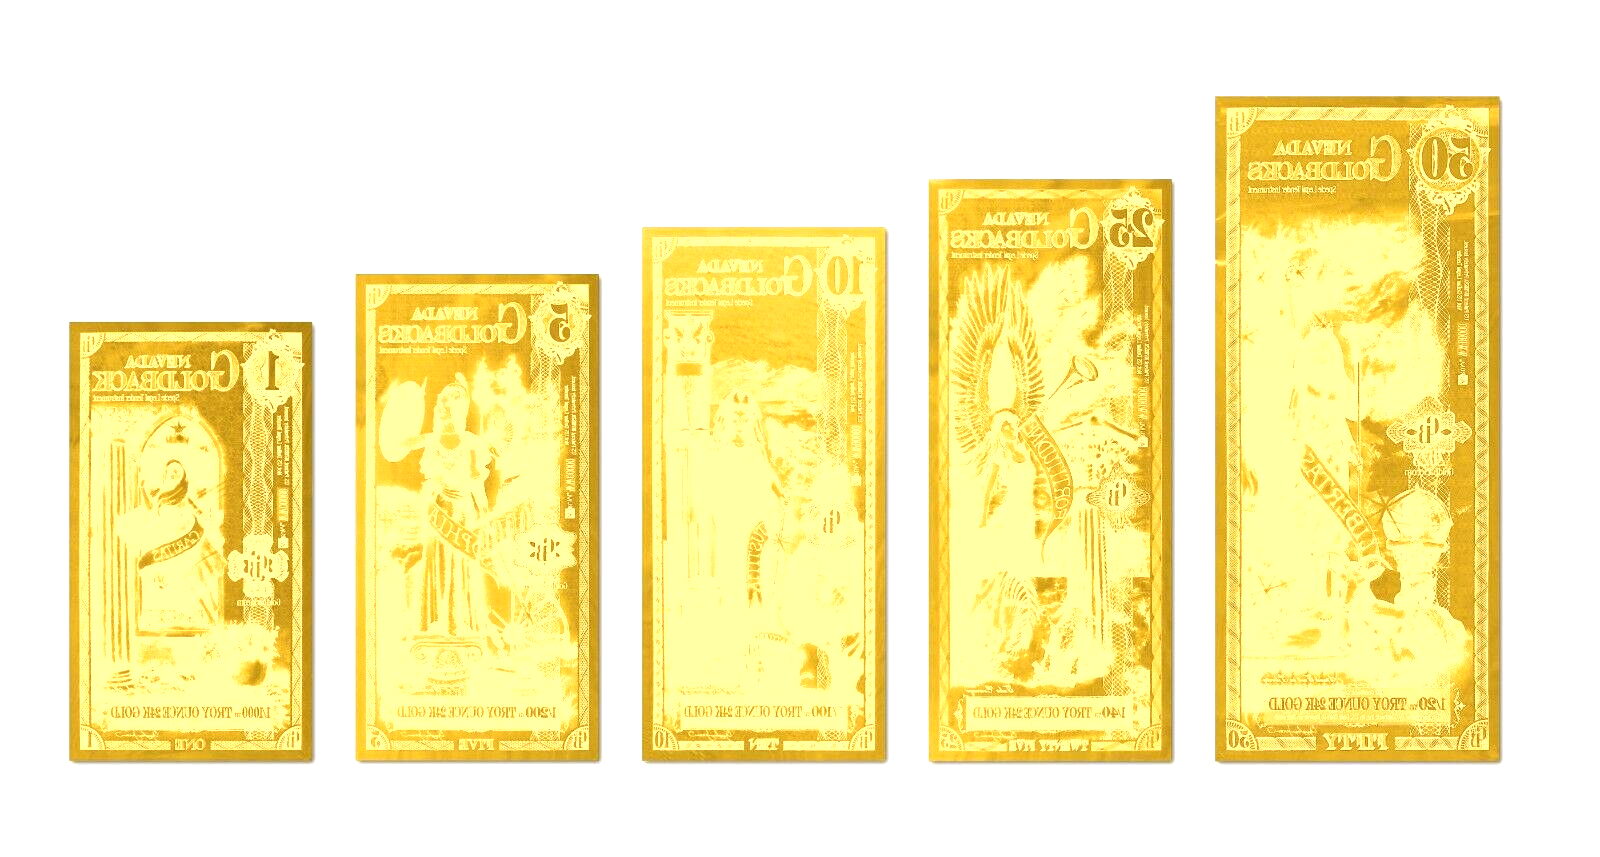 BROWN GOLDBACK LEATHER WALLET HOLDS 1,5,10,25,50 GOLDBACK 24K GOLD